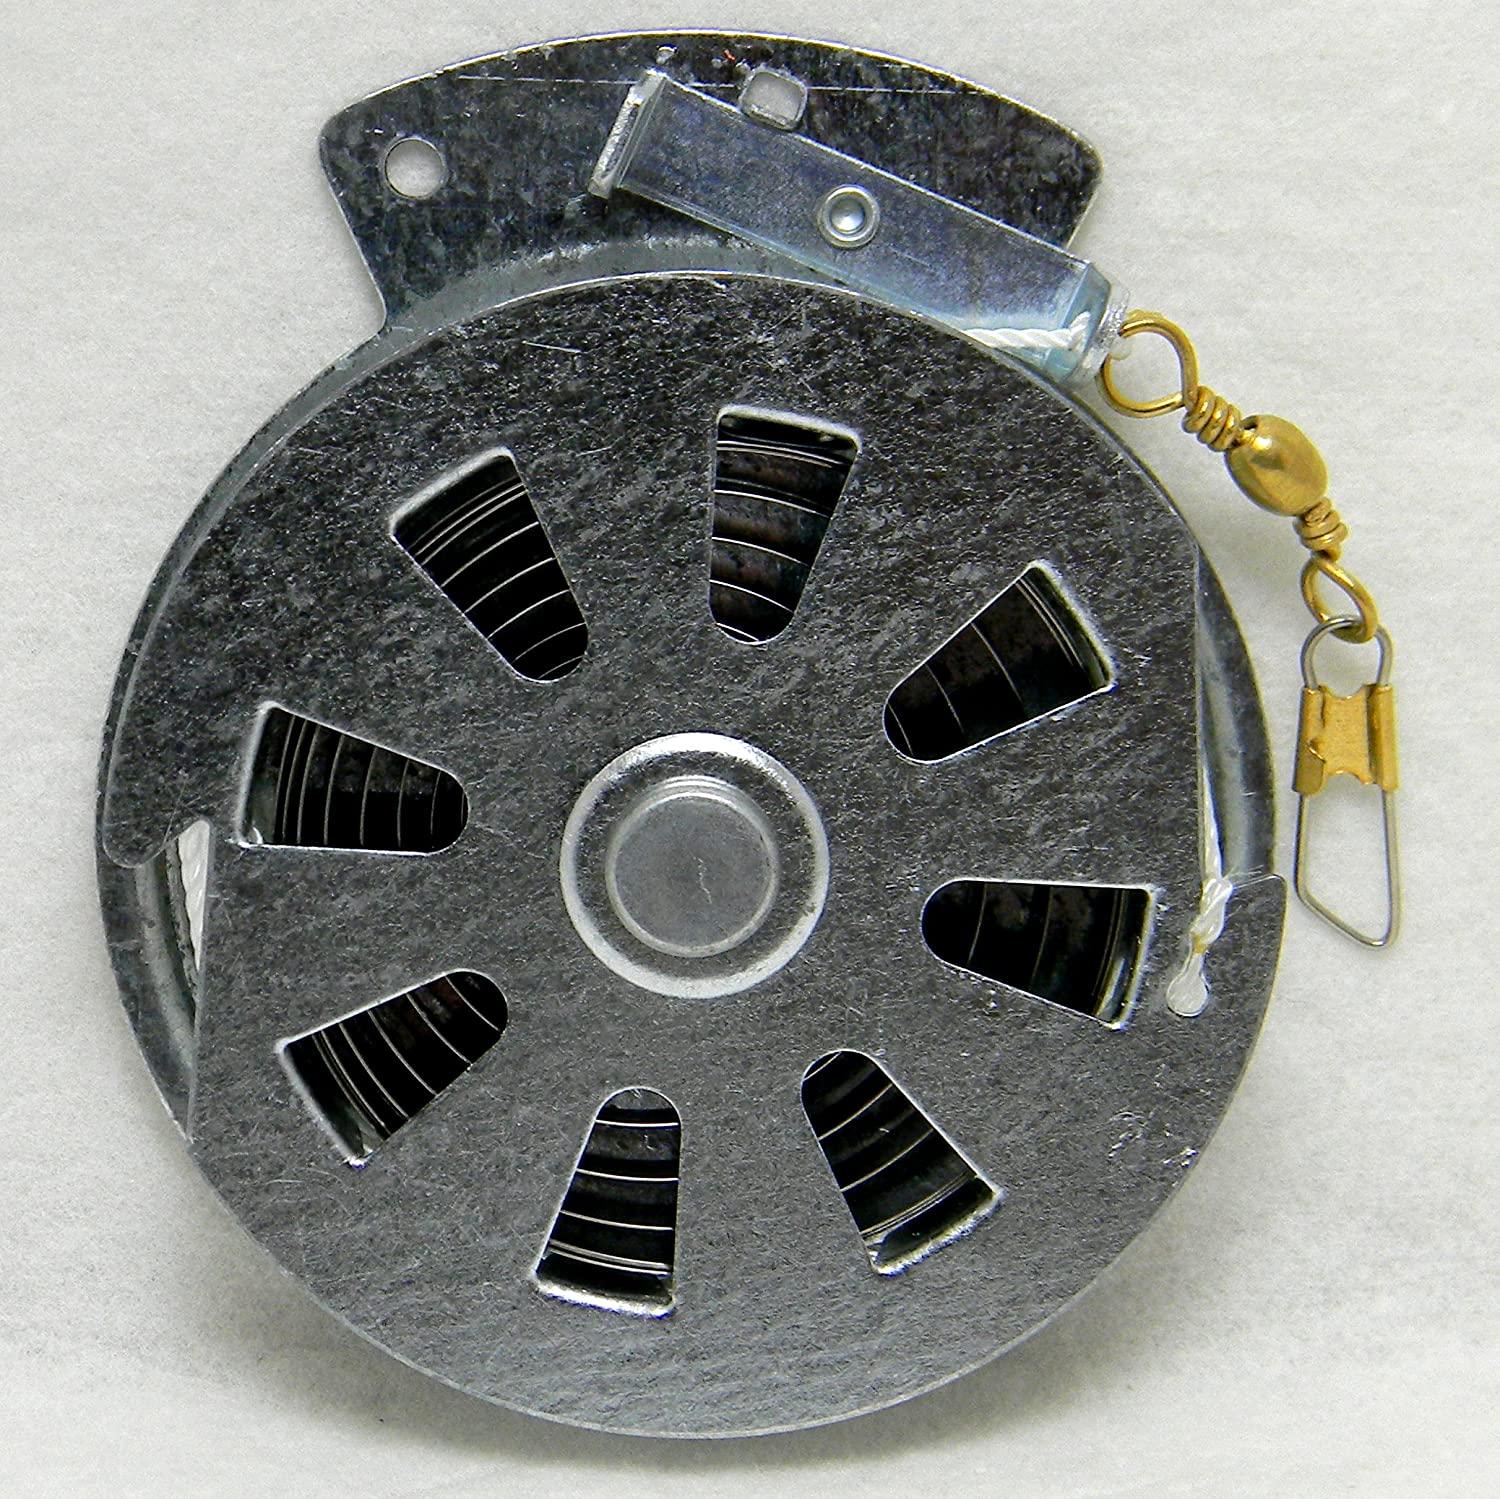 3 Mechanical Fisher's Yo-Yo Automatic Fishing Reels - Package of 3 Reels -  Yoyo Fish Trap - Standard Wire Trigger Model